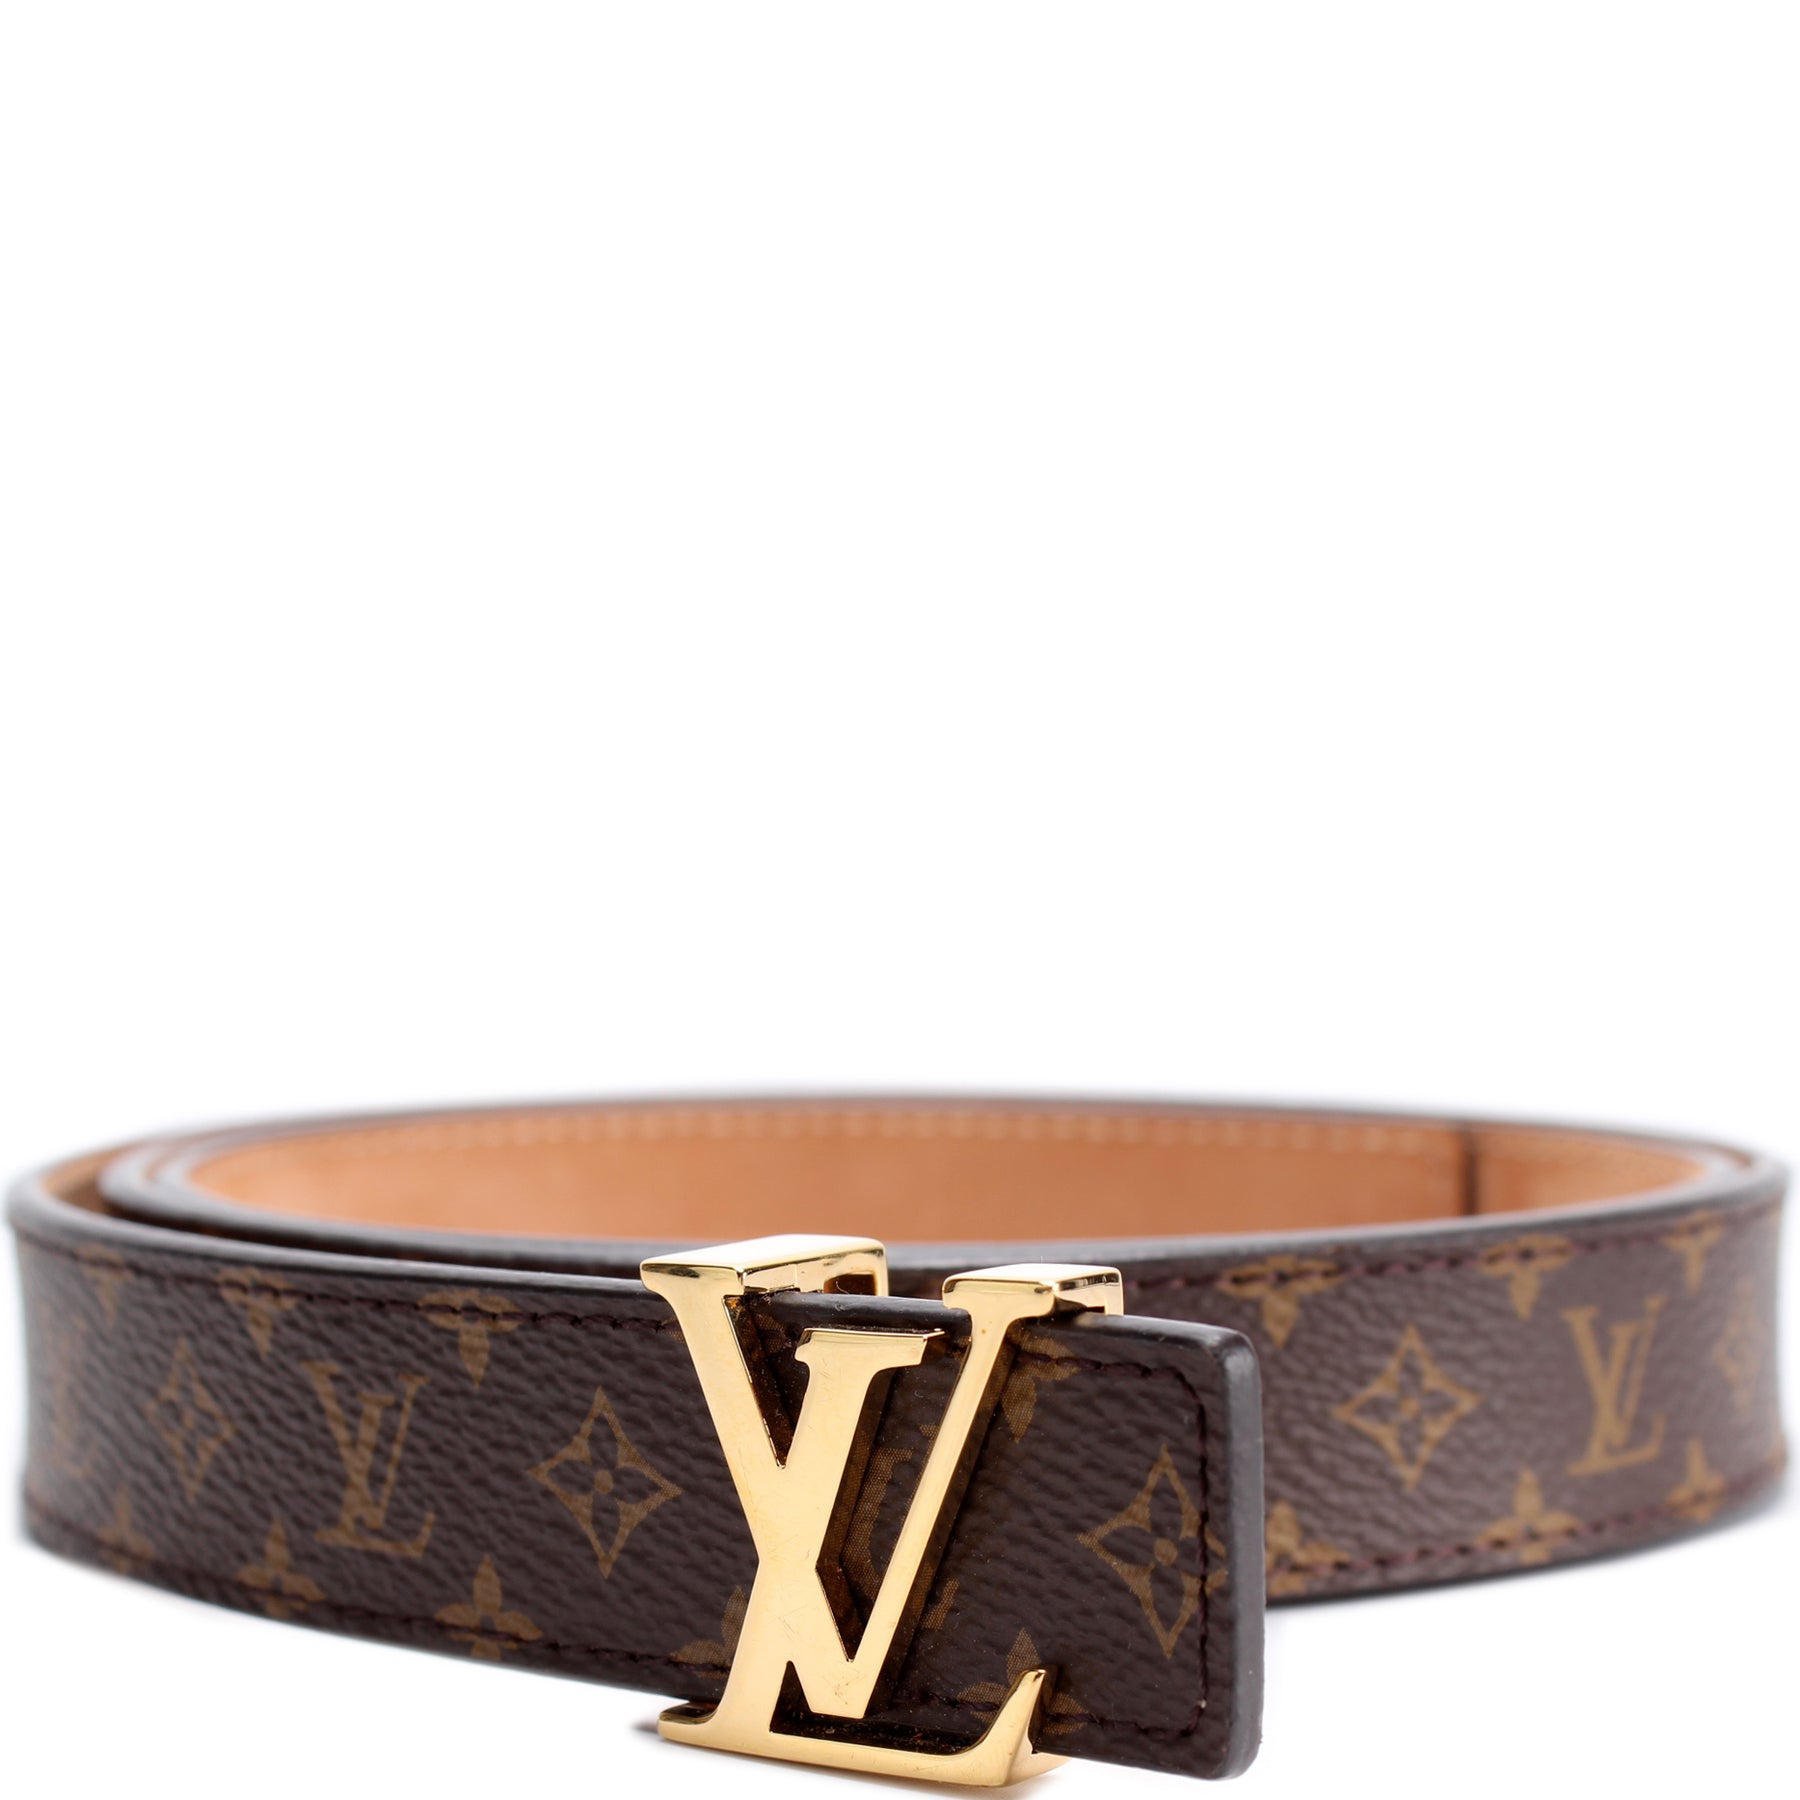 Louis Vuitton - Red Monogram LV Initiales Logo Buckle Belt – eluXive